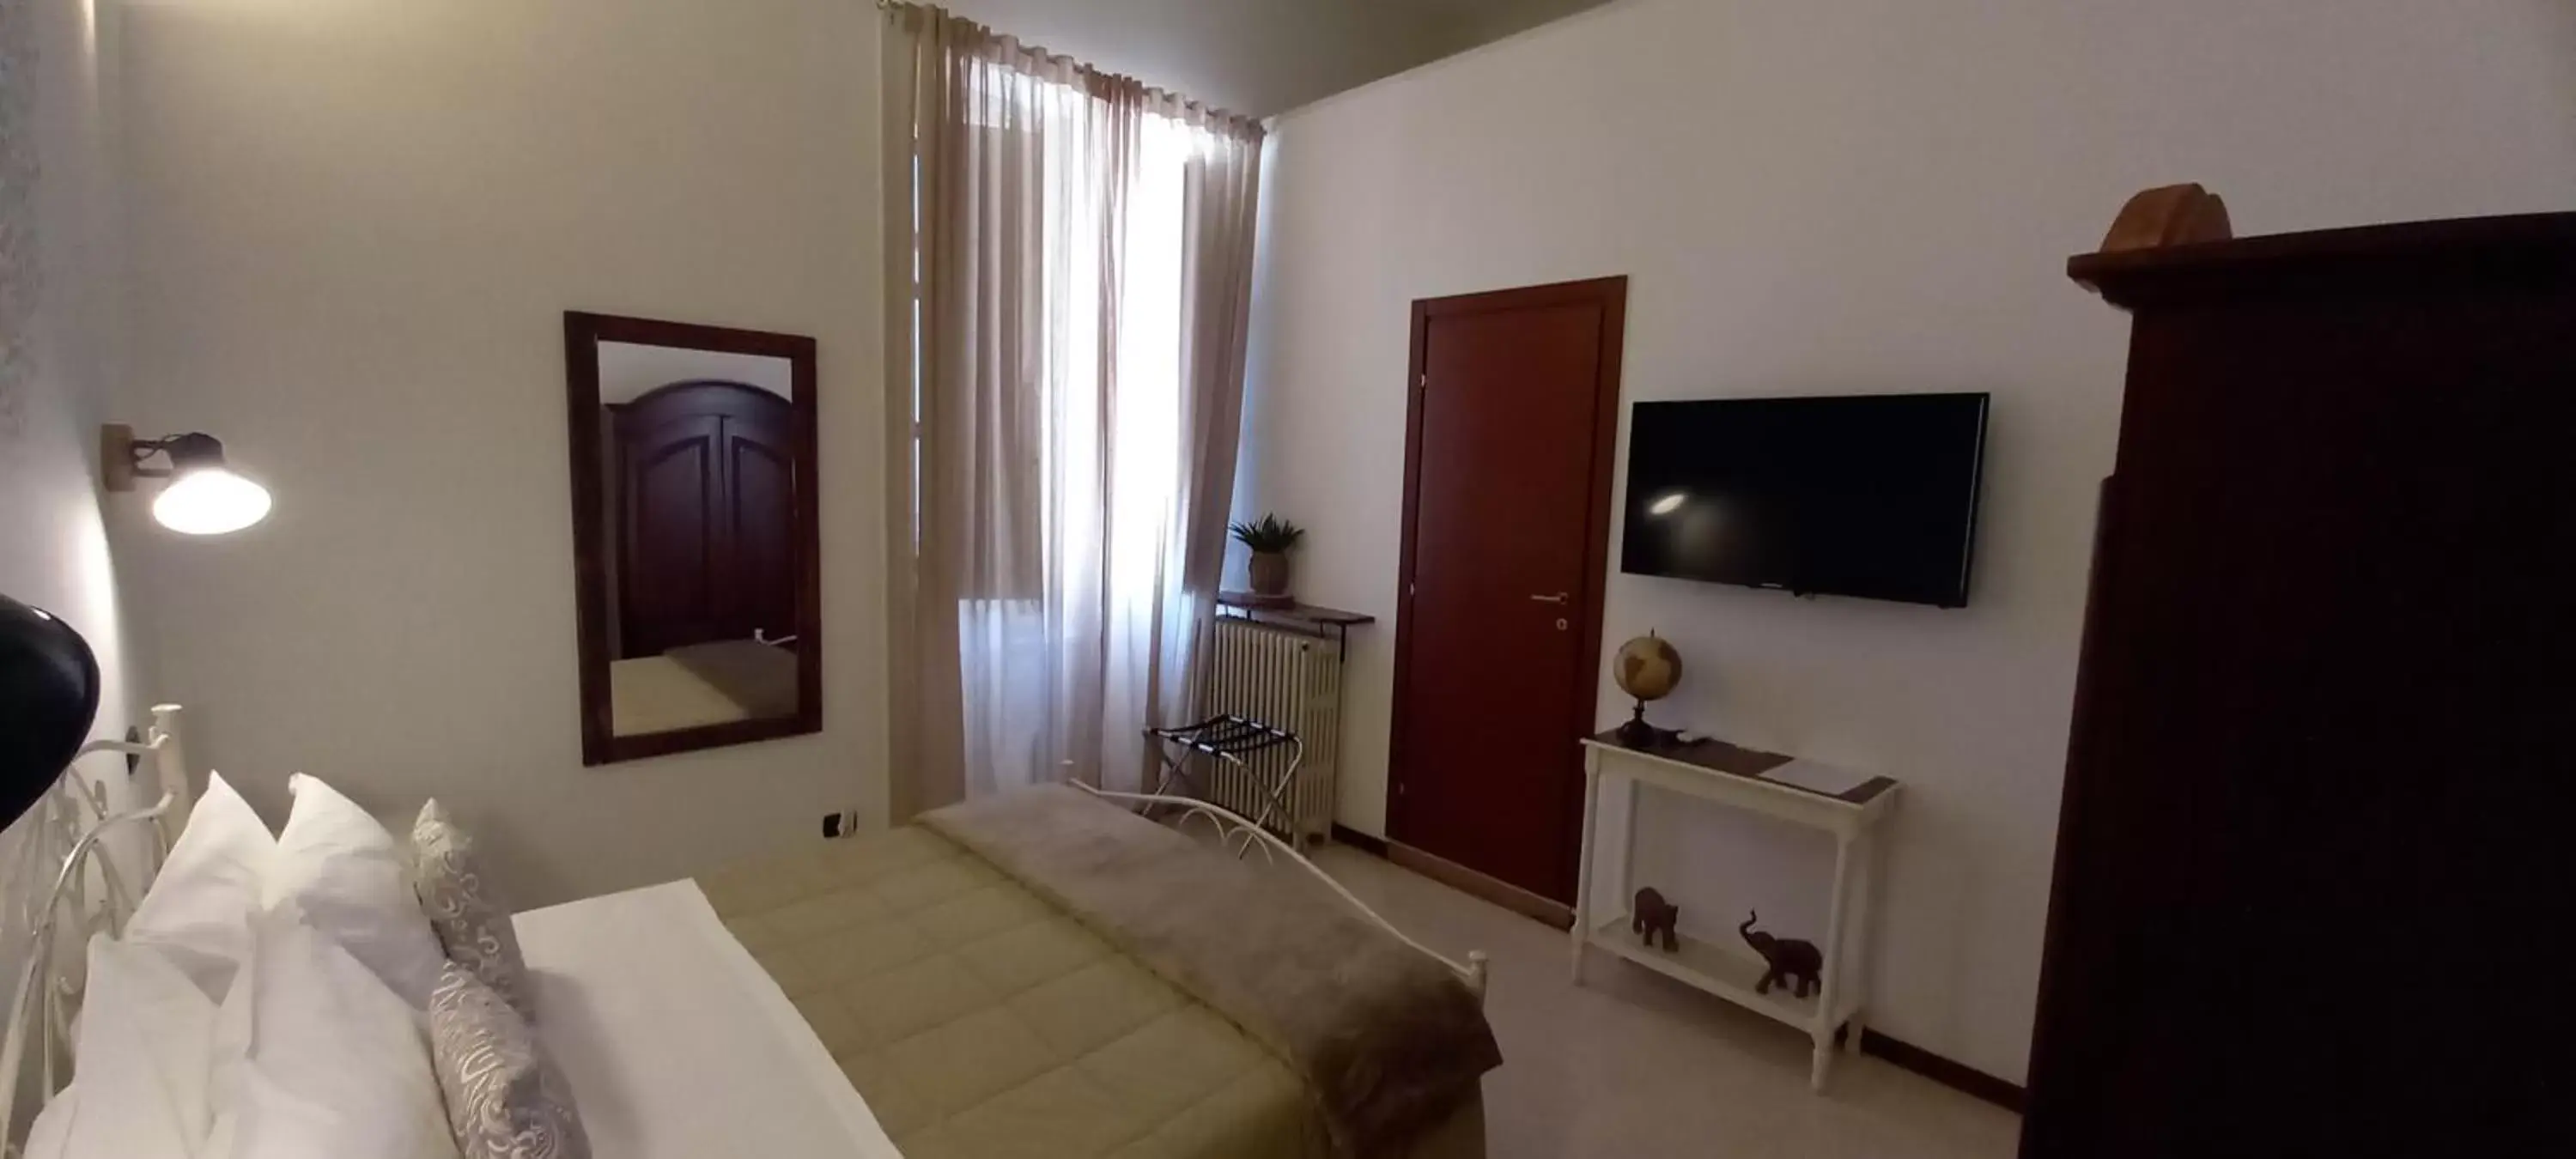 Bedroom, TV/Entertainment Center in B&B Acanto Lecce